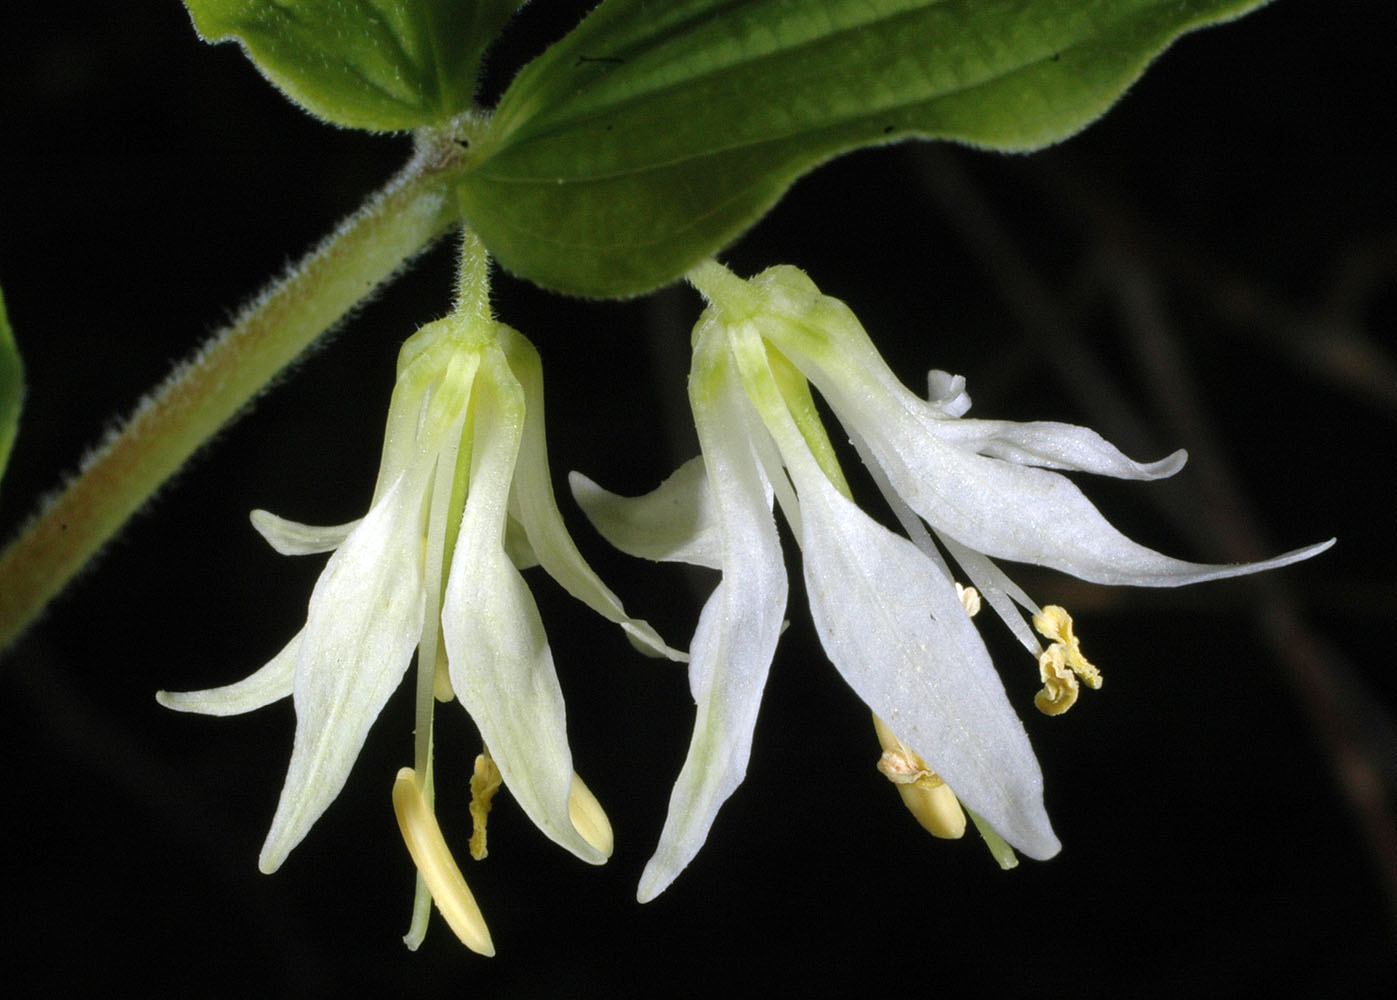 Flora of Eastern Washington Image: Prosartes hookeri